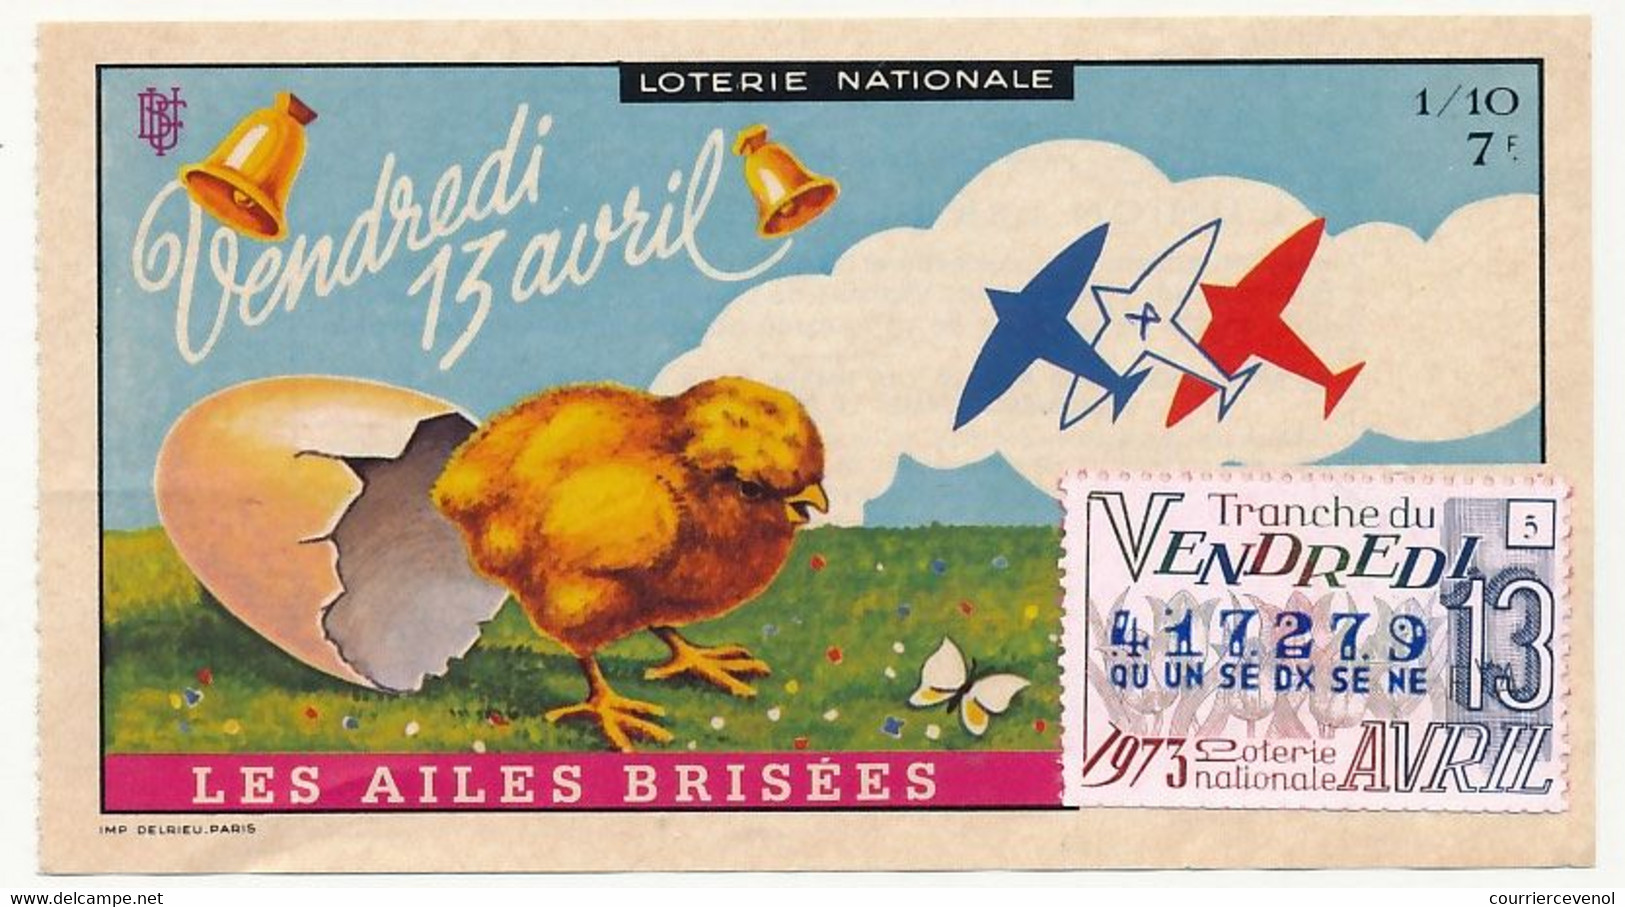 FRANCE - Loterie Nationale - 1/10e Les Ailes Brisées - Vendredi 13 Avril - Tranche Du Vendredi 13 Avril 1973 - Lottery Tickets